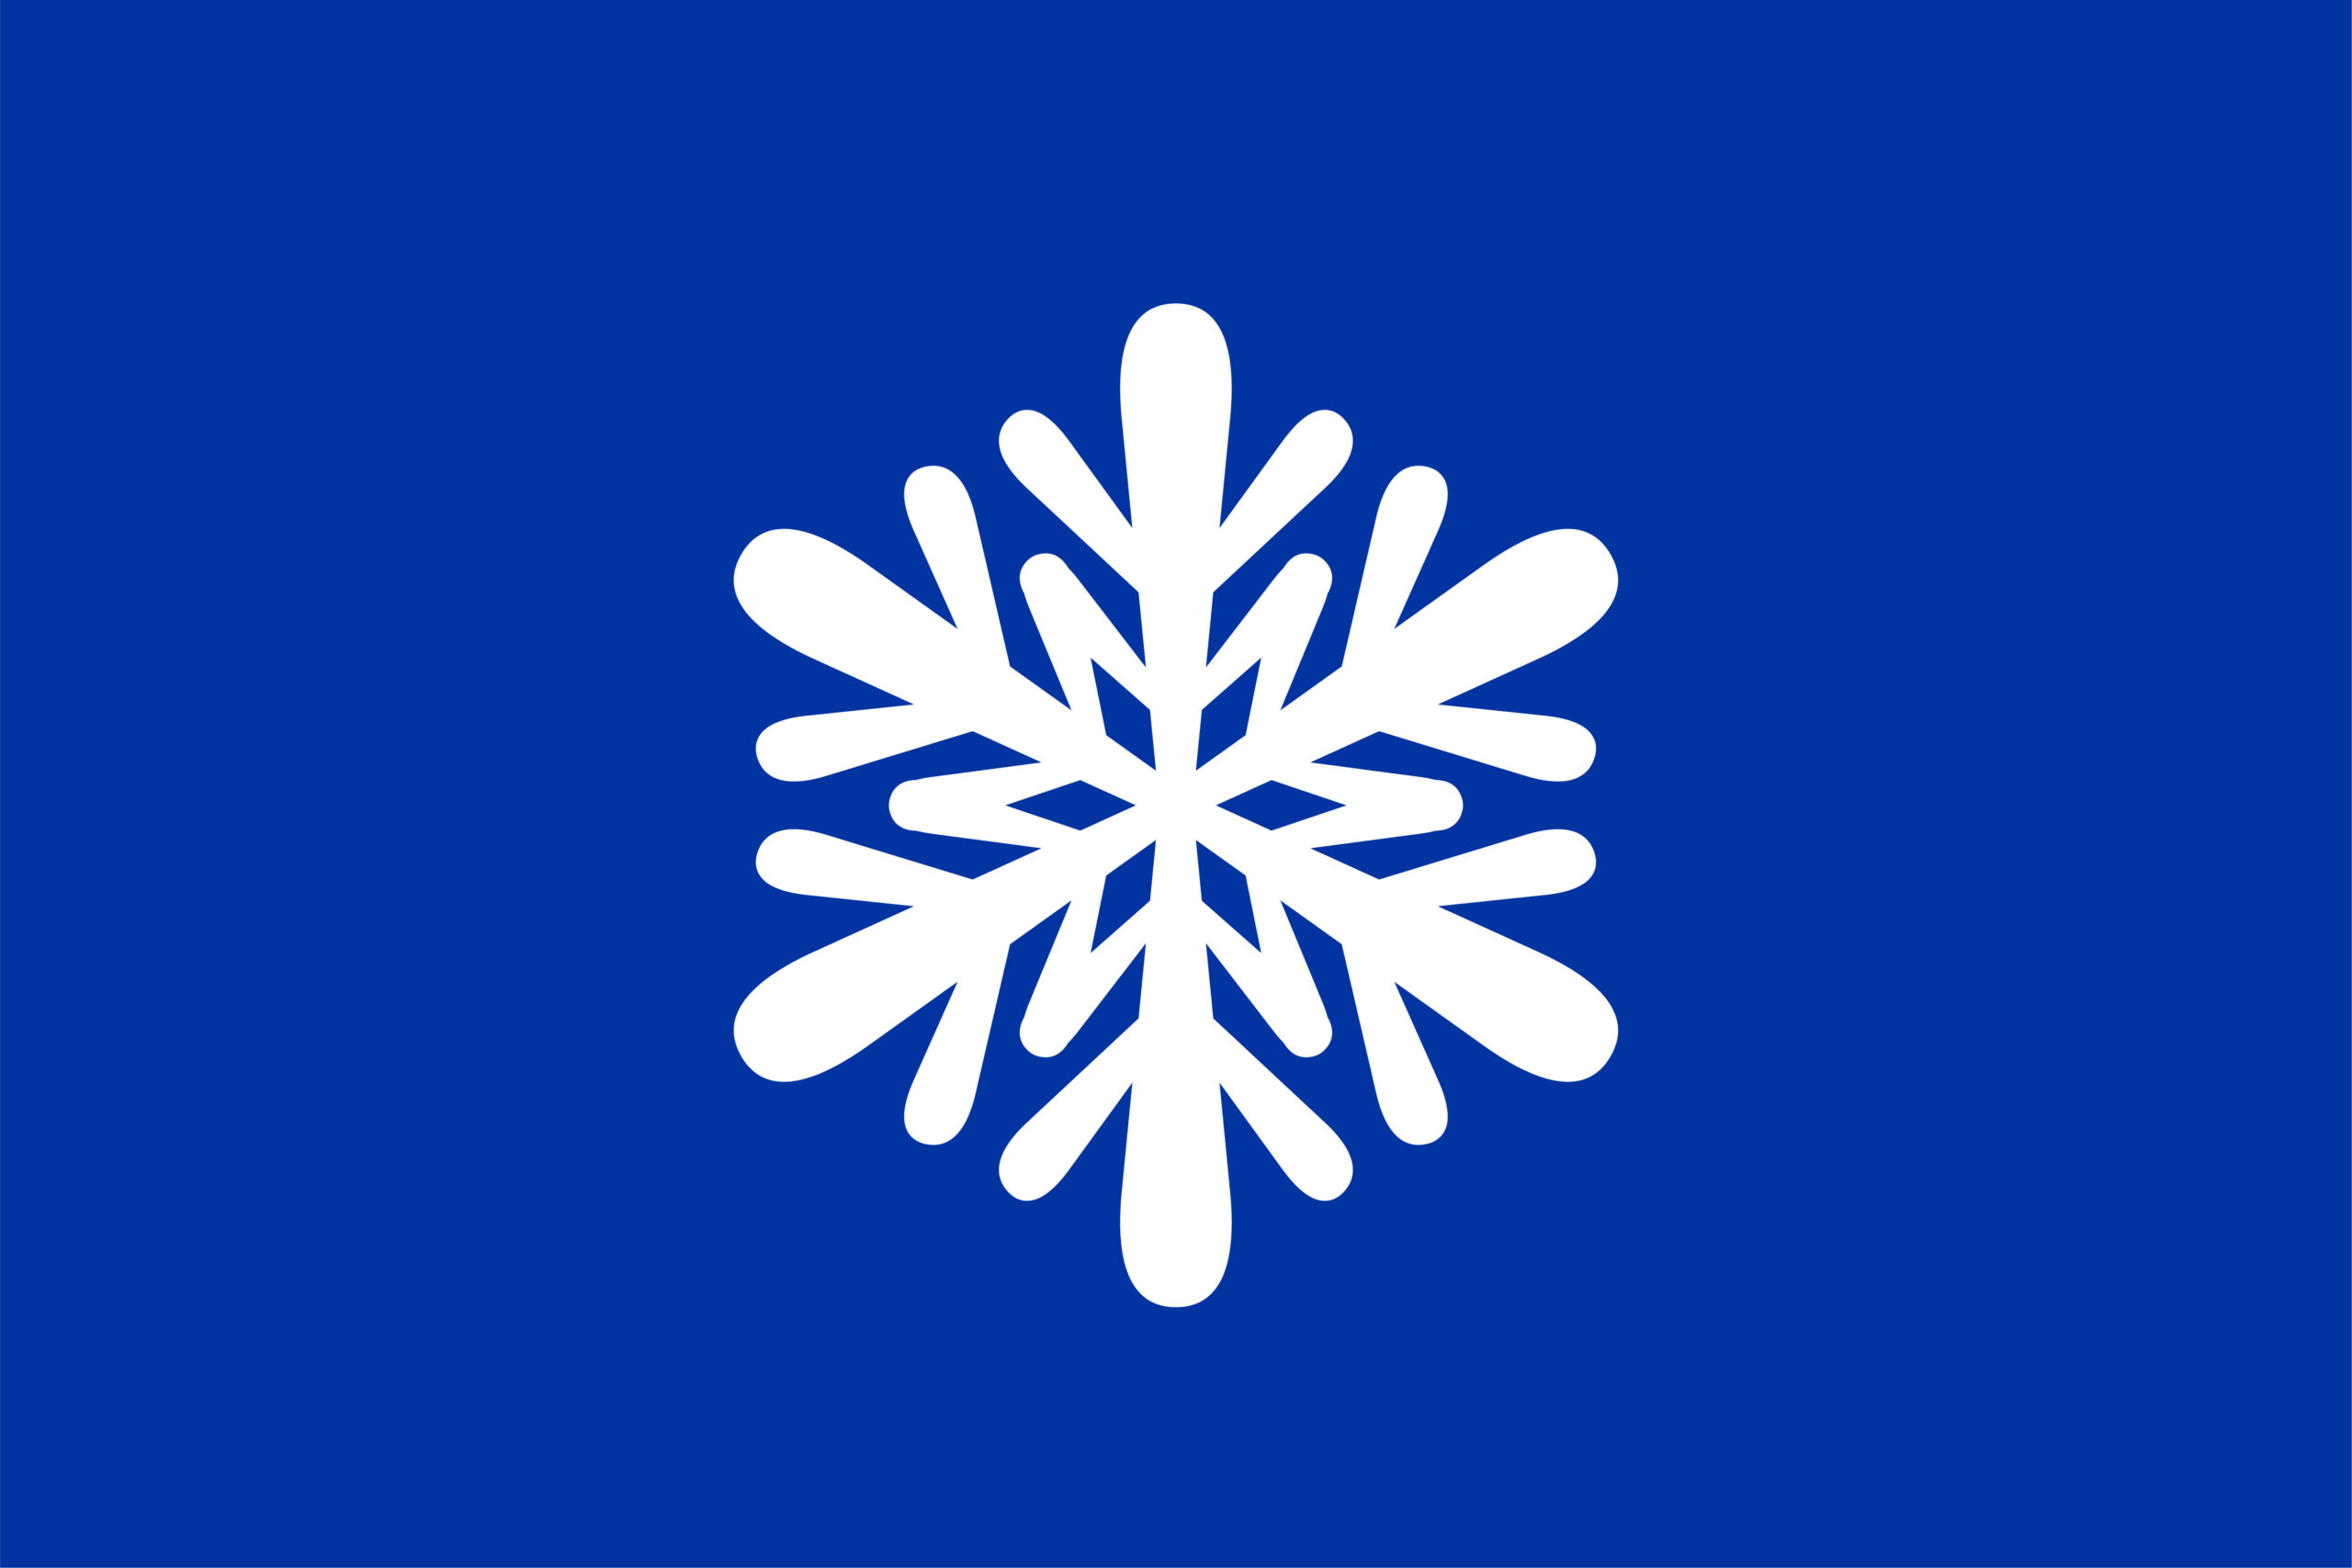 white snowflake on a blue background